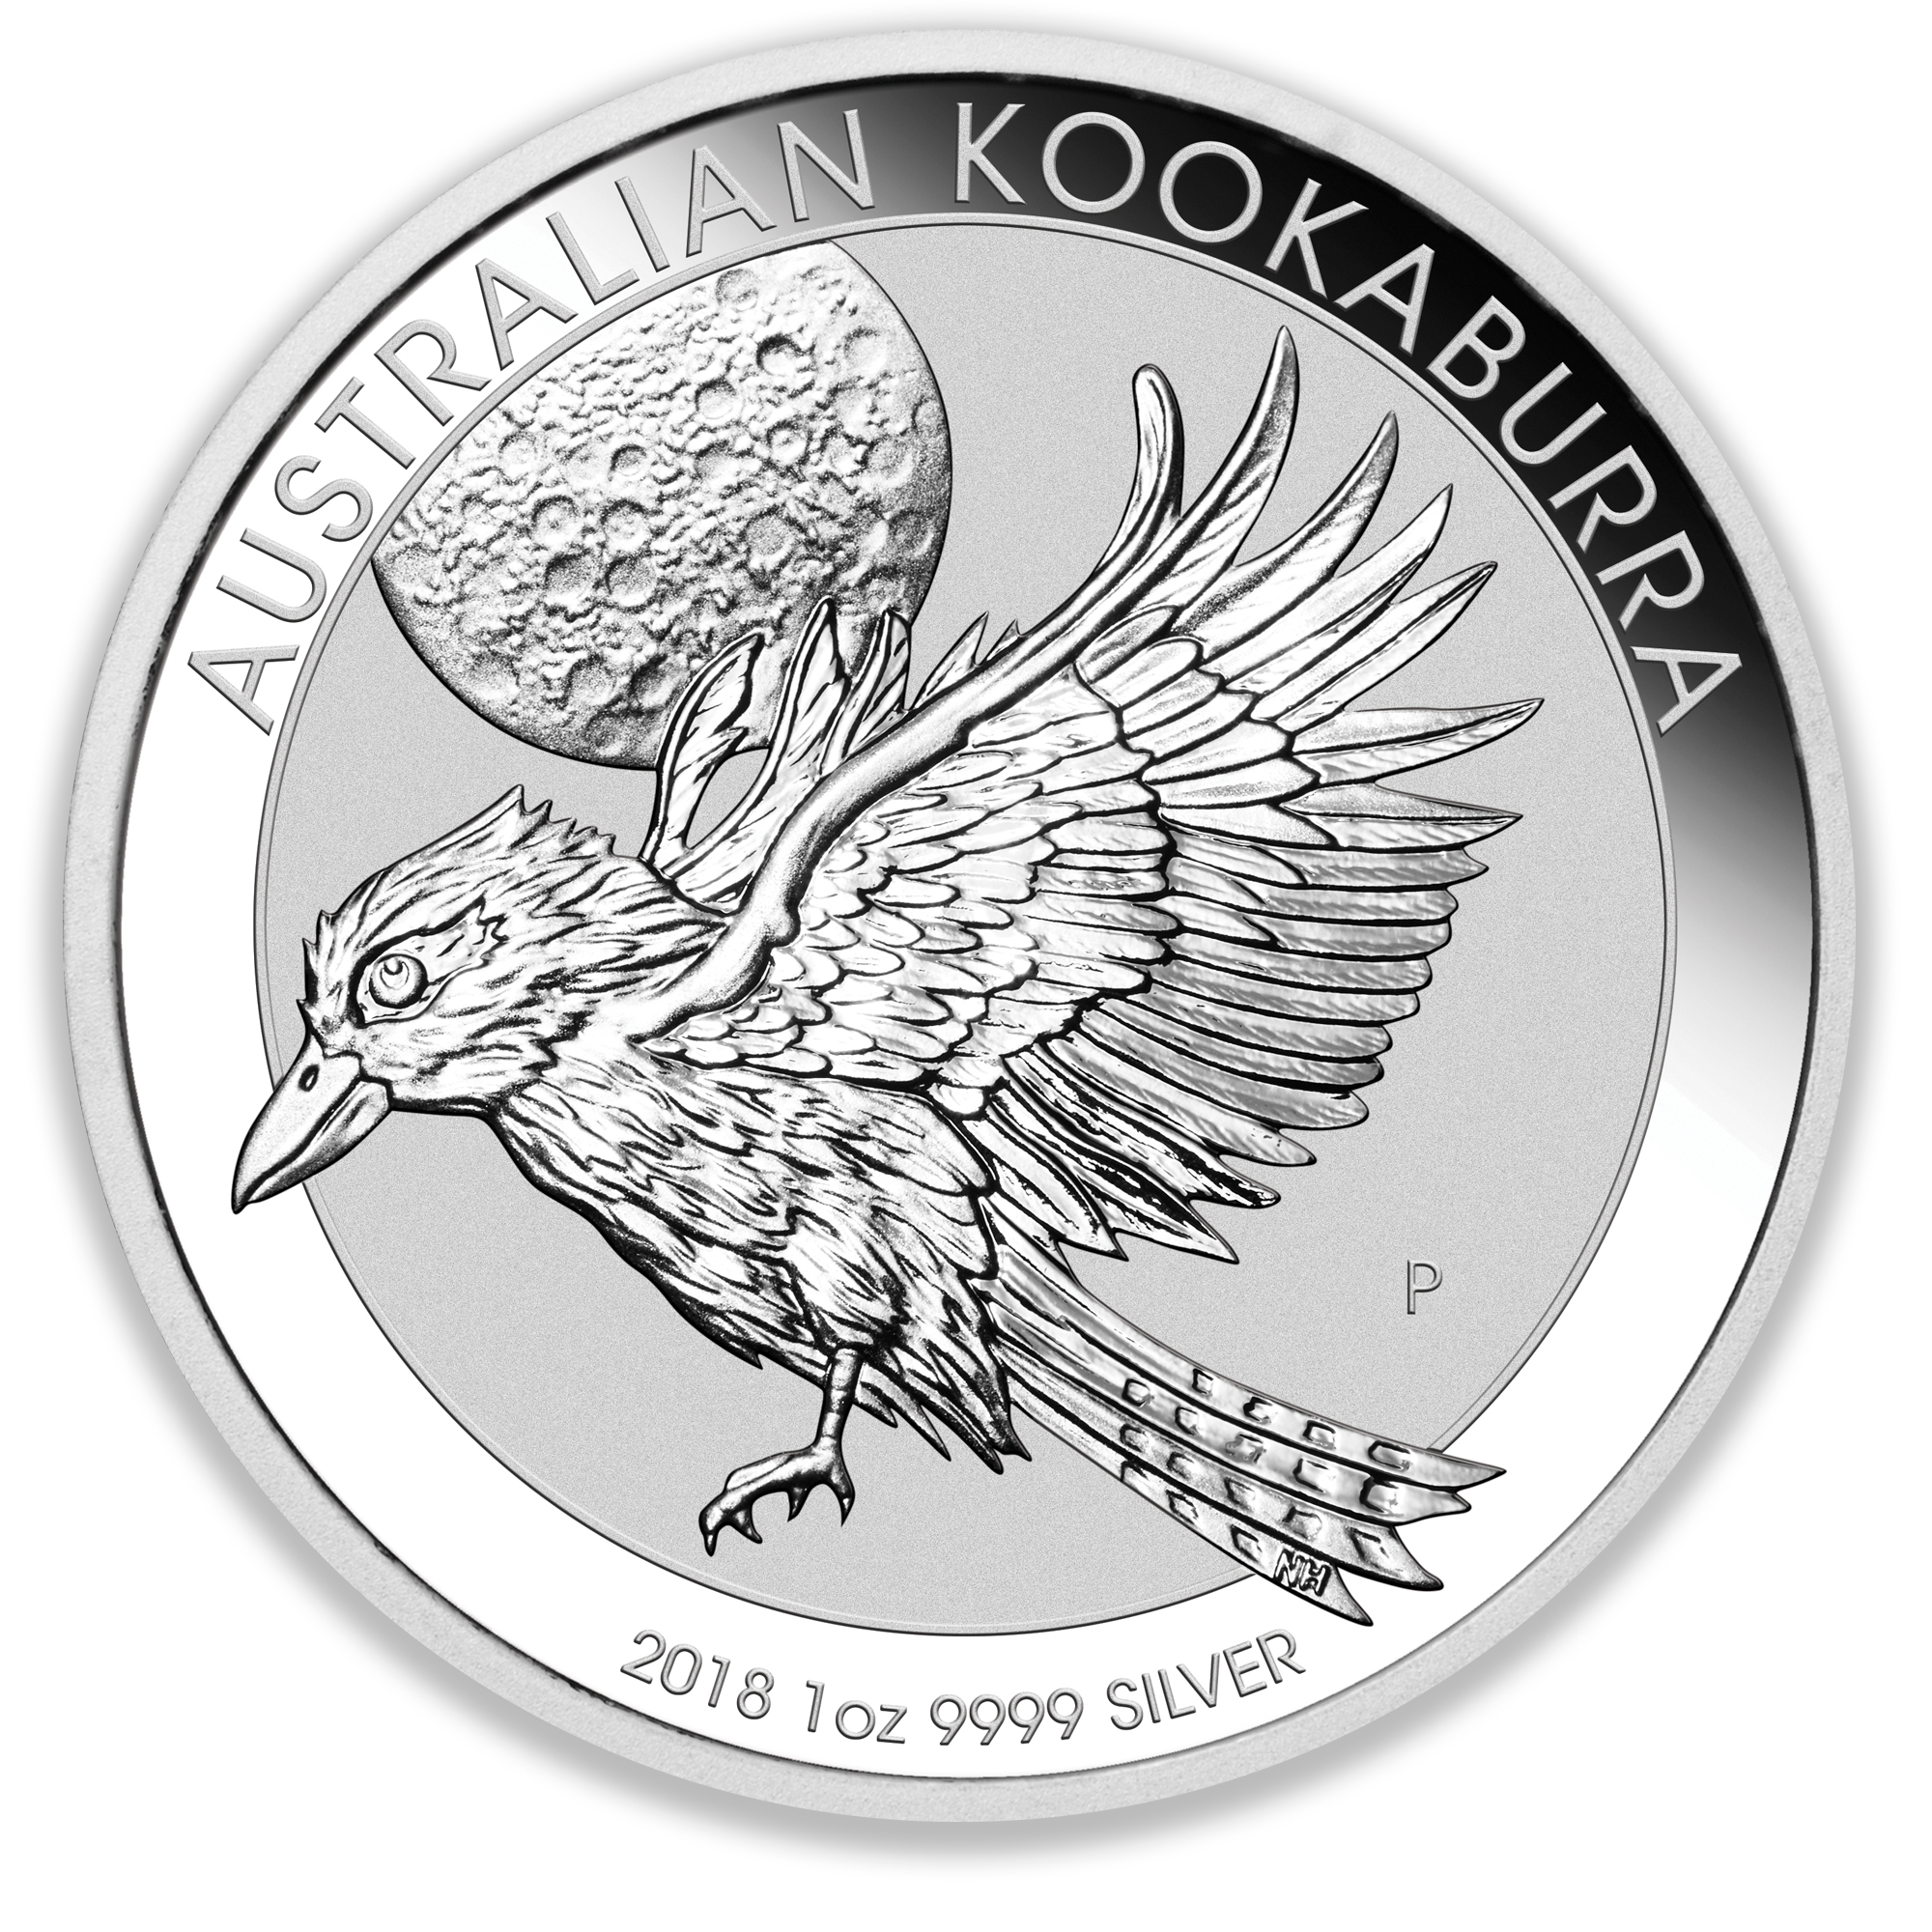 2018 1oz Perth Mint Silver Kookaburra Coin